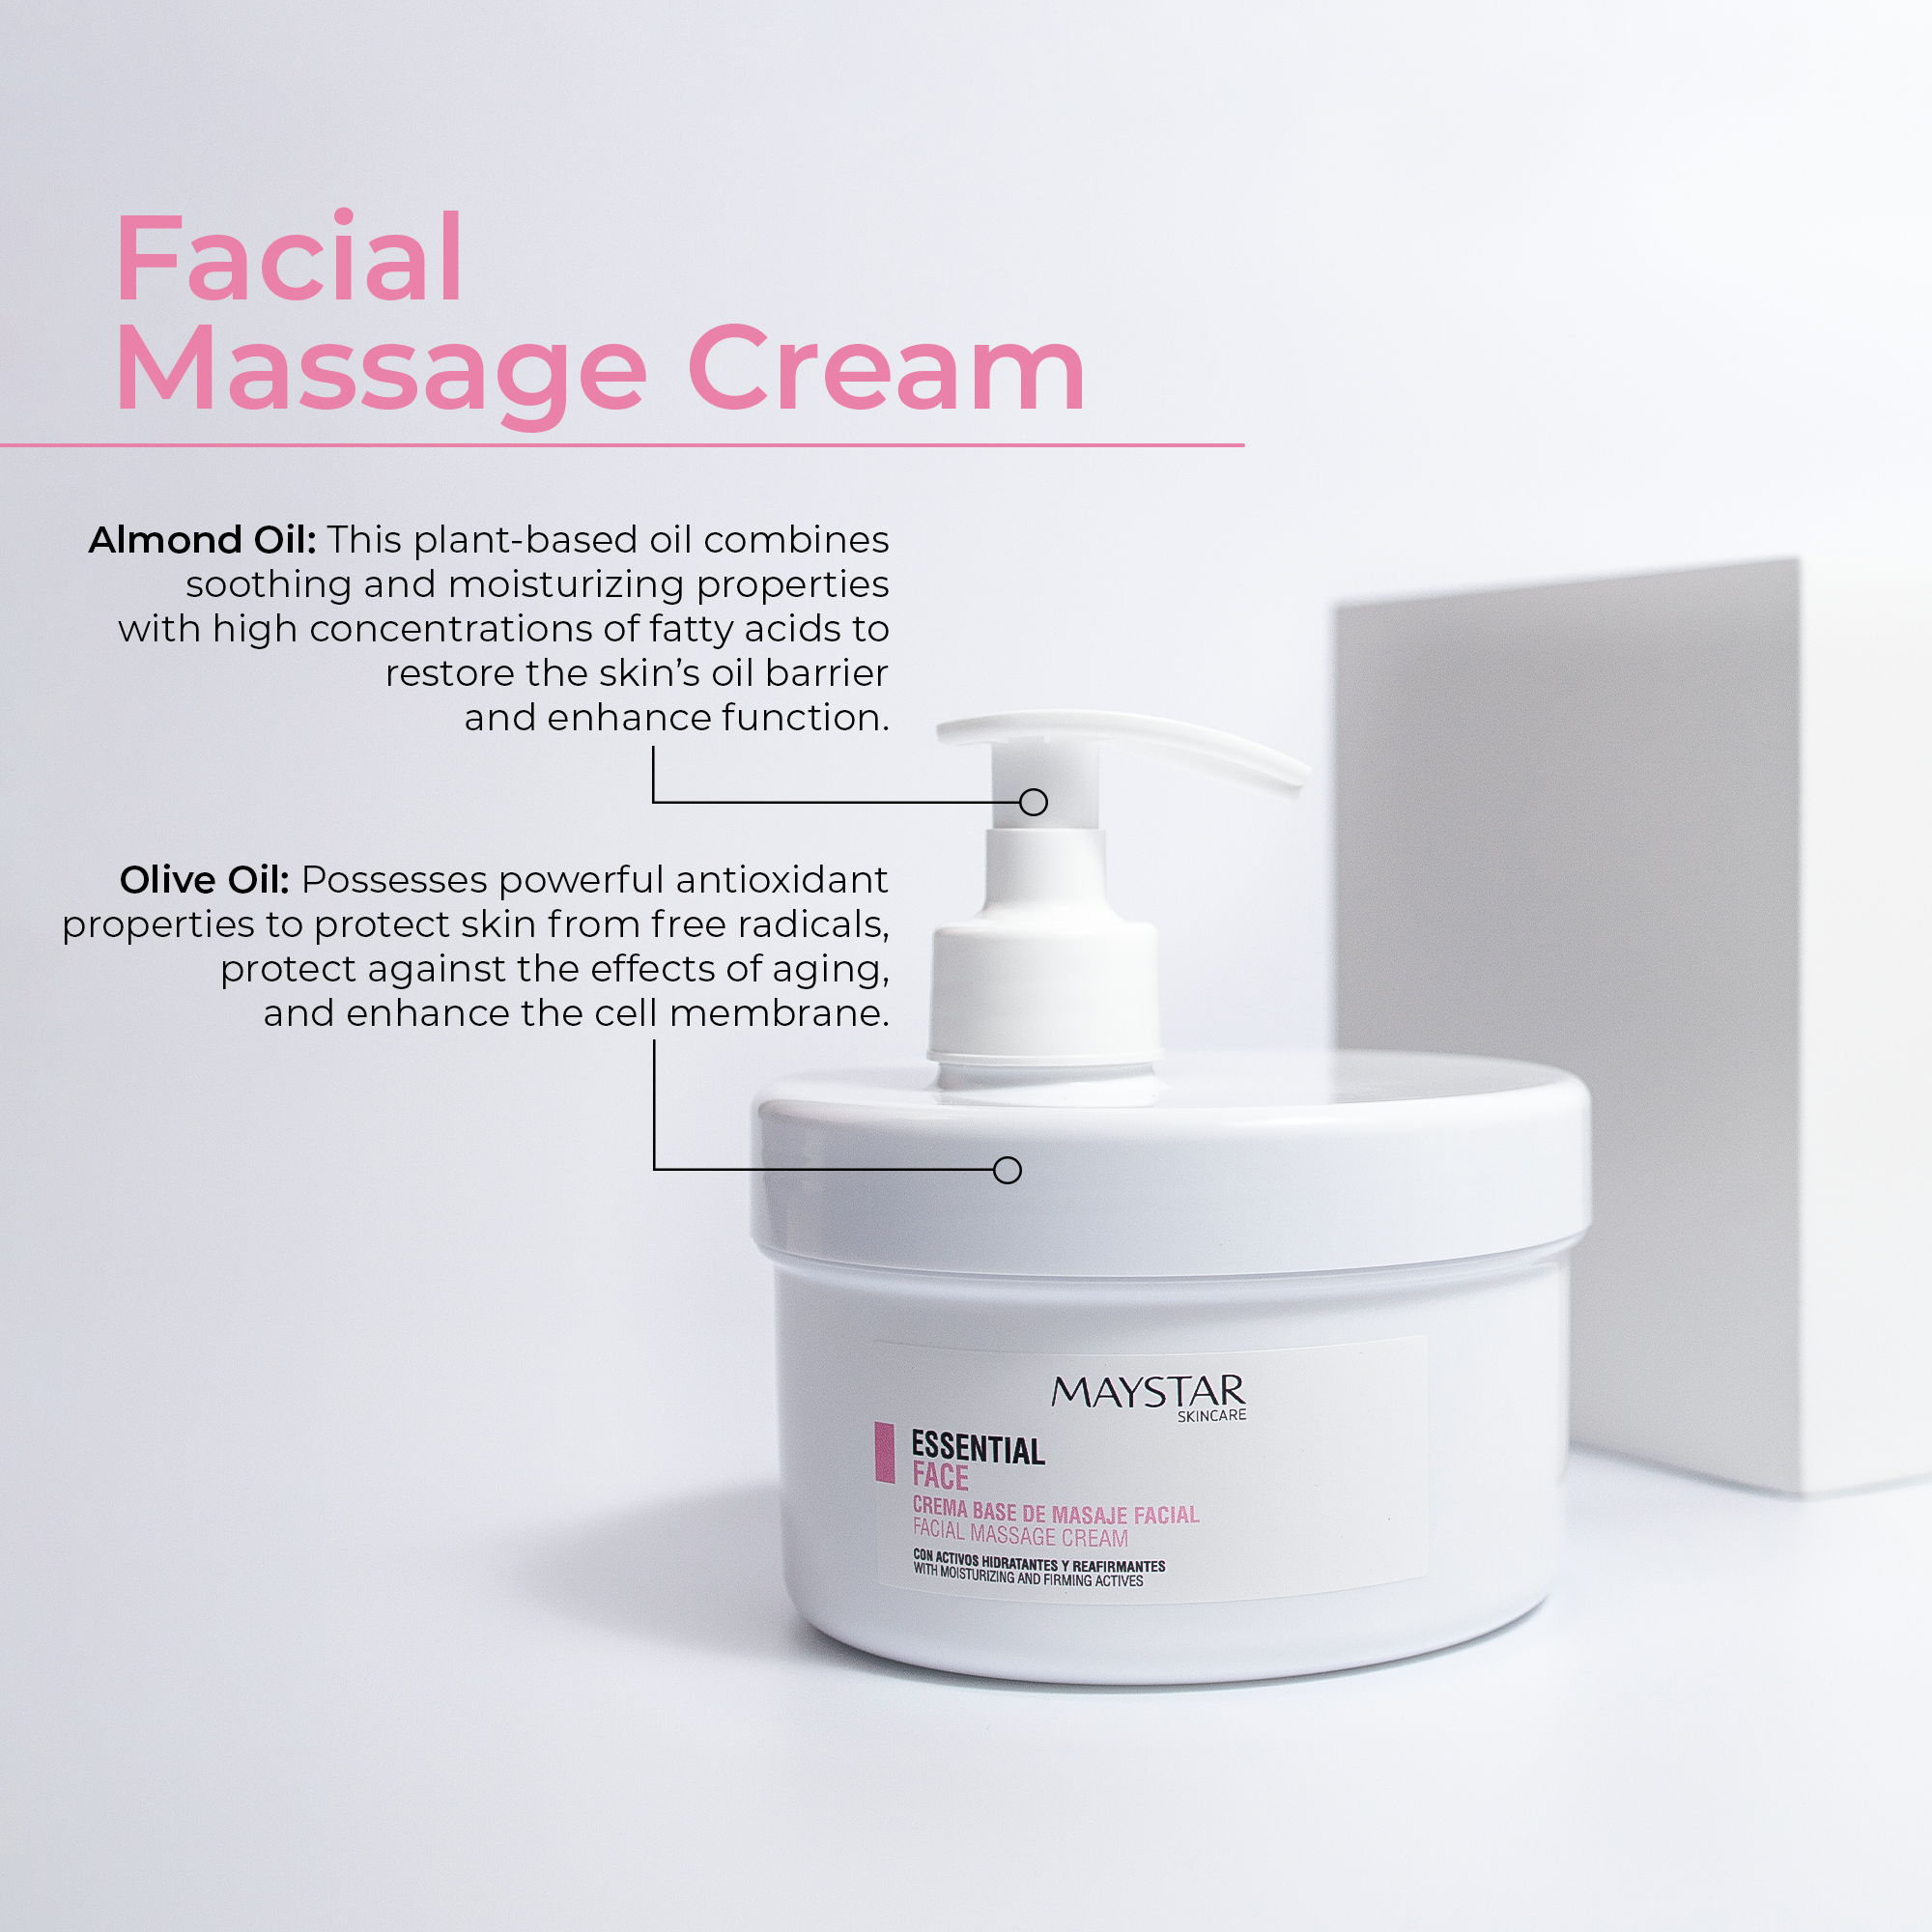 Creme de Massagem Facial - Maystar Essential